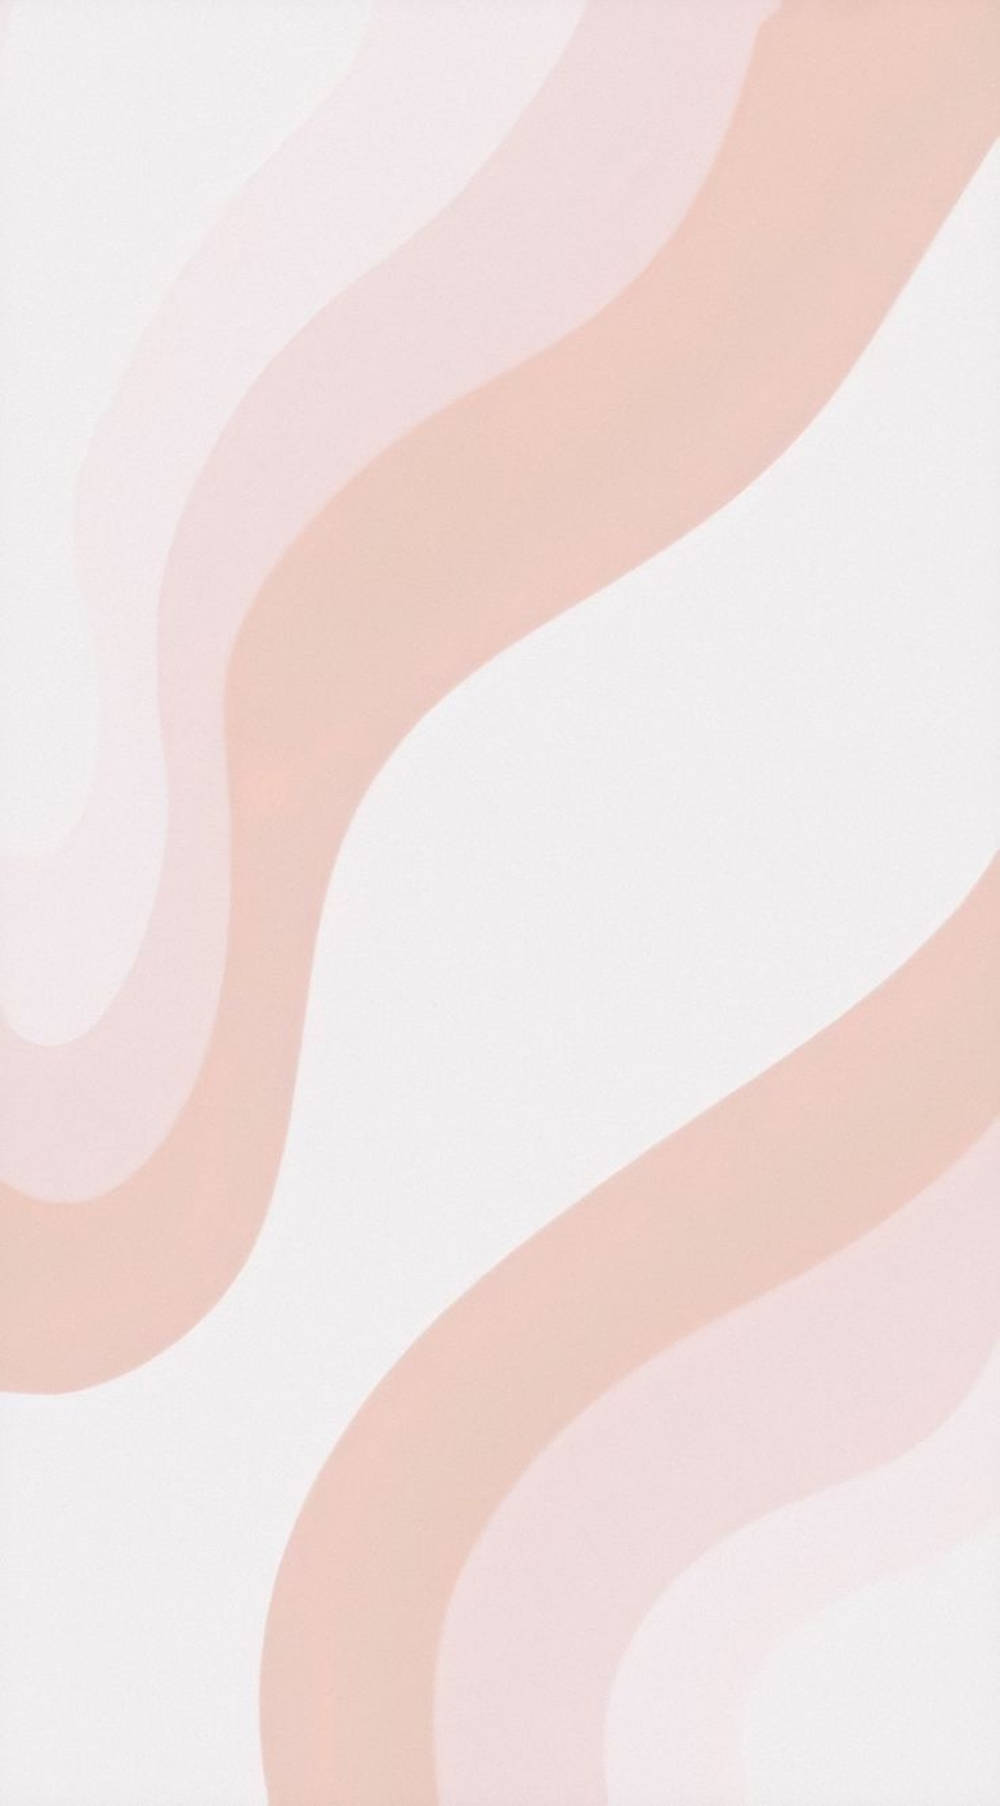 Caption: Embrace Simplicity With Pink Boho Design Wallpaper